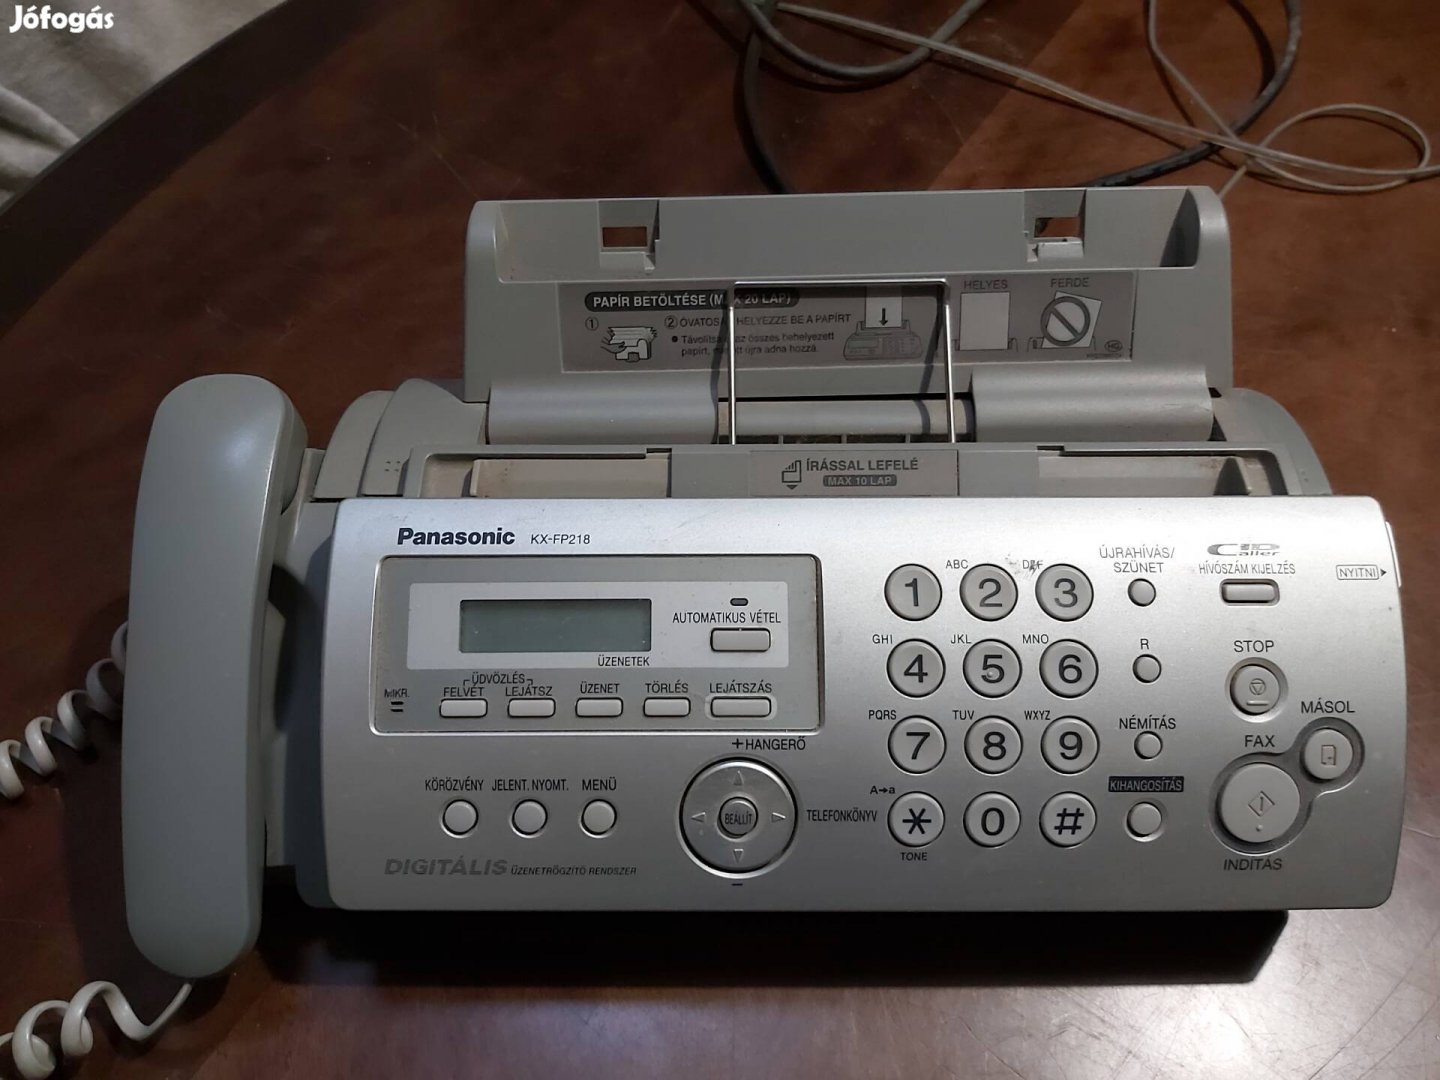 Panasonic Kx-FP218 telefon, fax